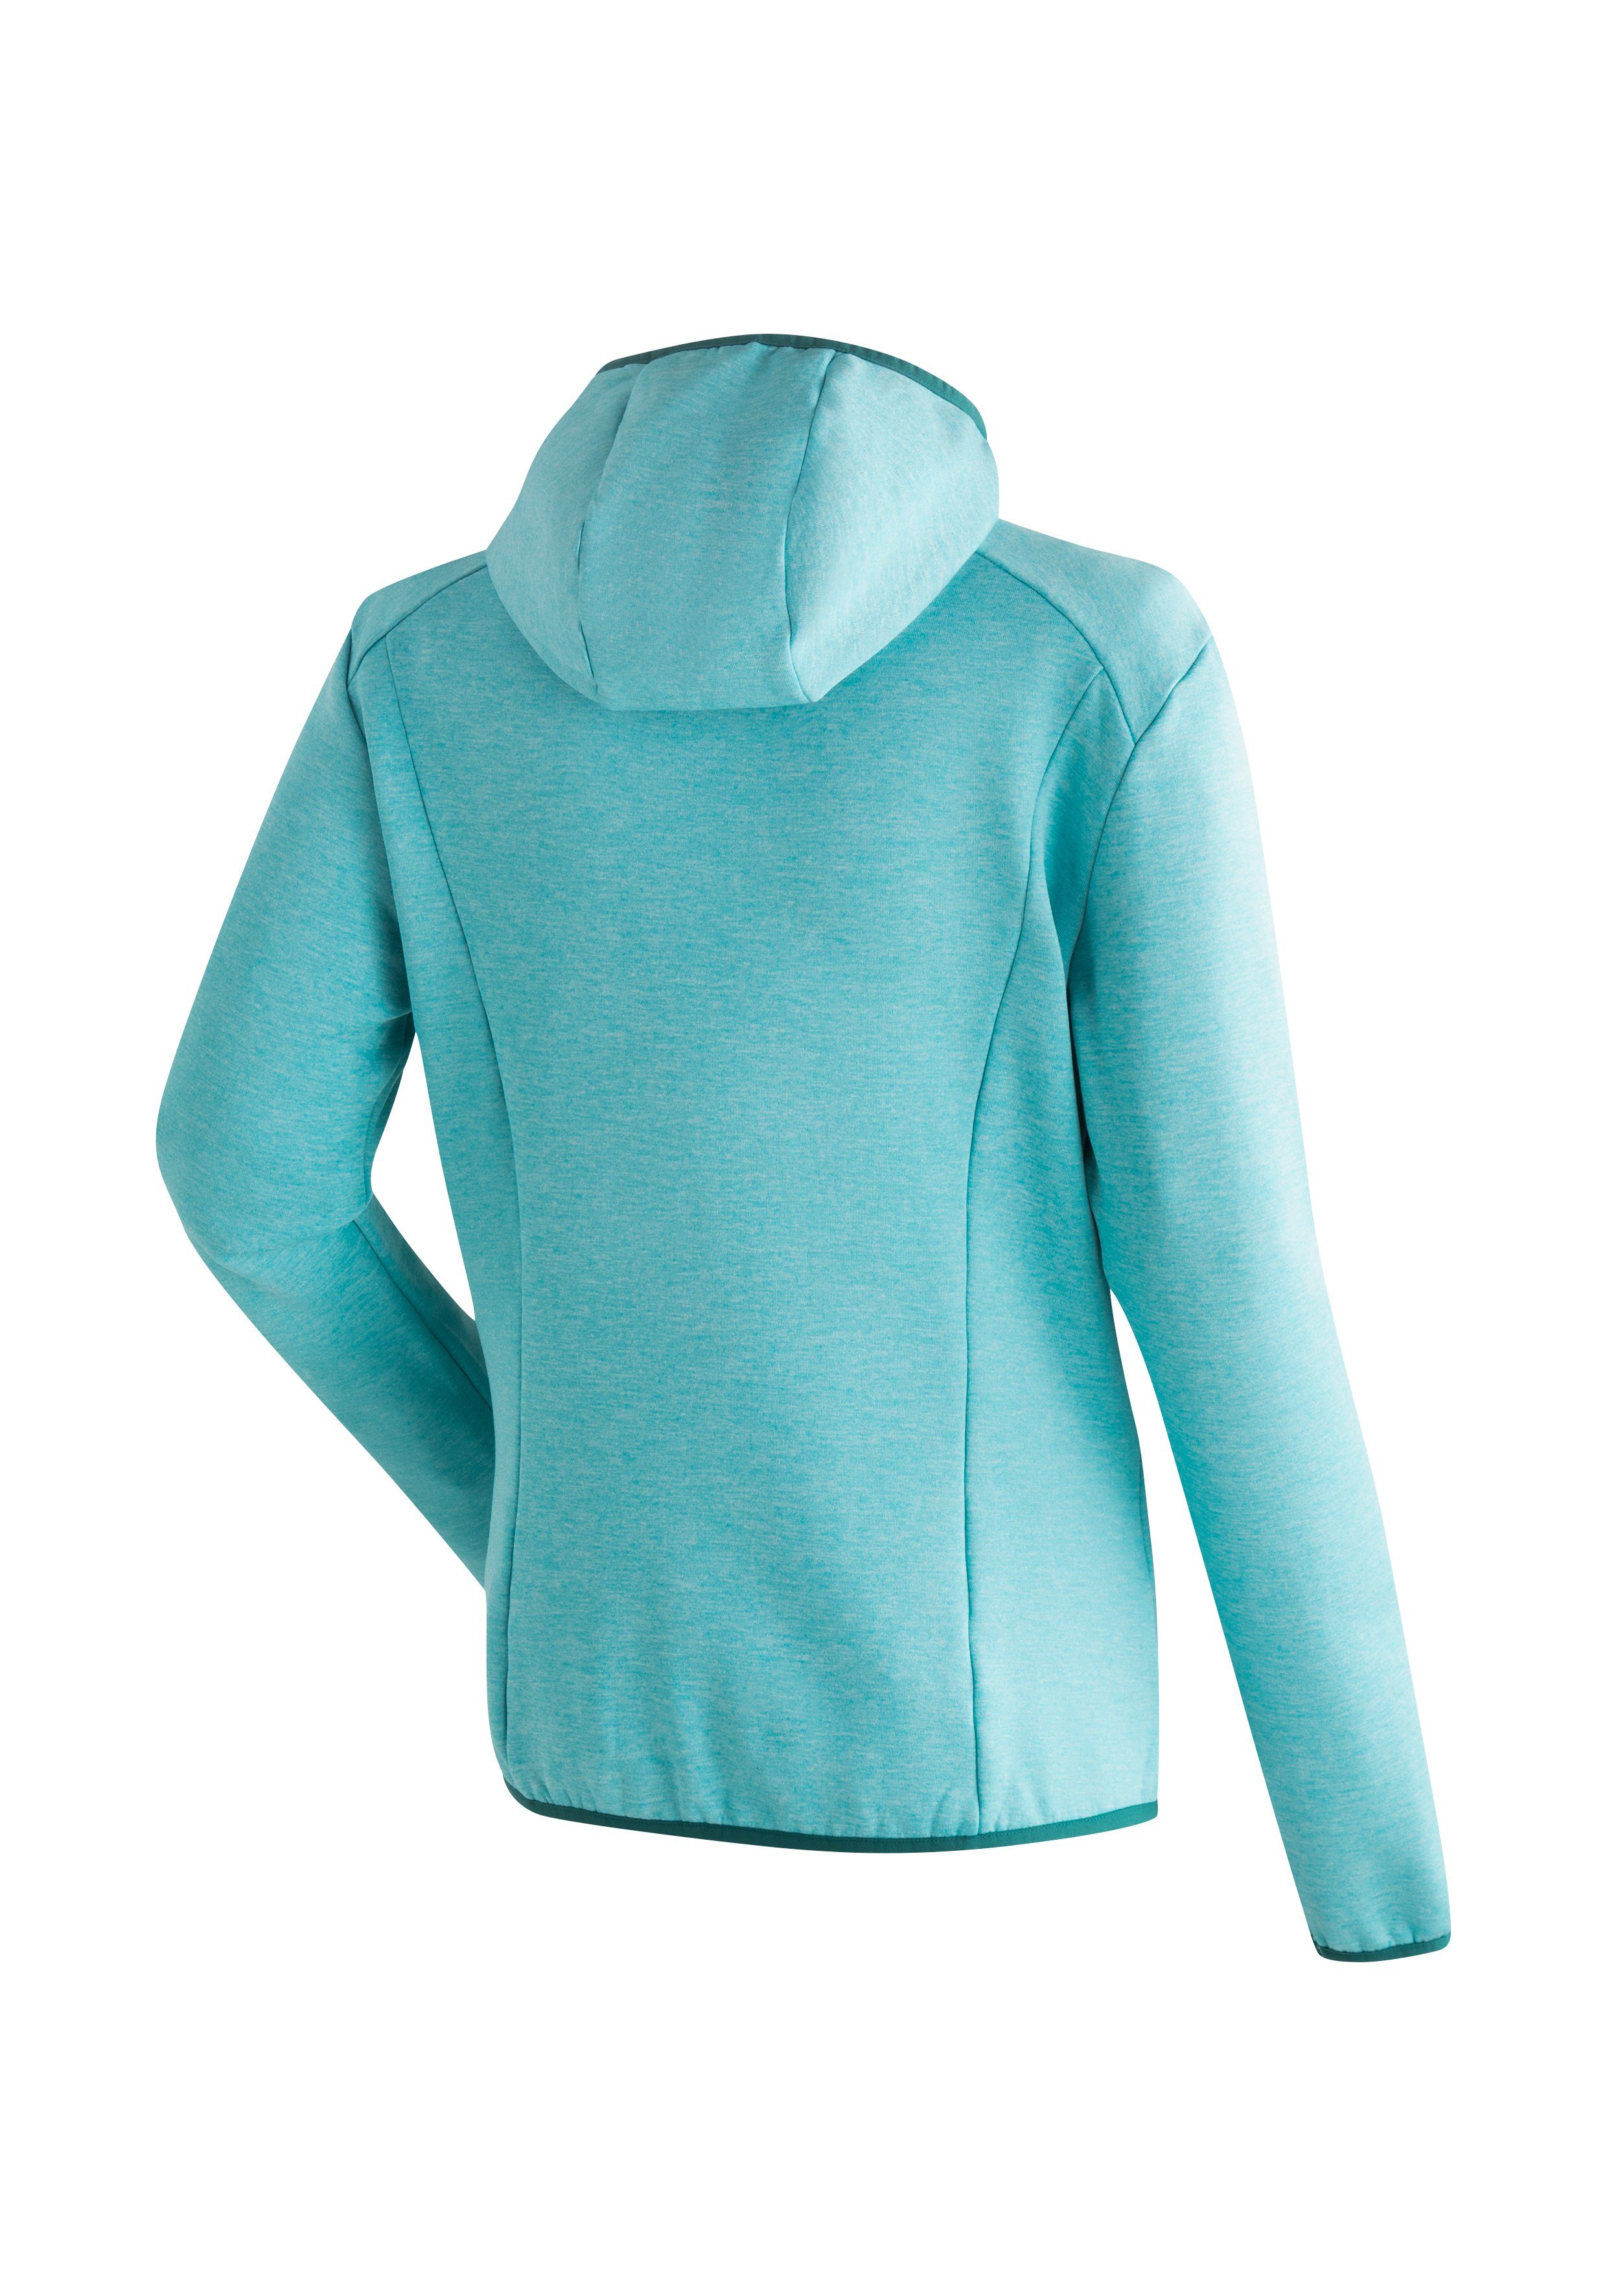 Maier Sports Fleecejacke Zip-Hoodie Damen mit atmungsaktiver aquablau Fleece W verstellbarer Kapuze, Fave